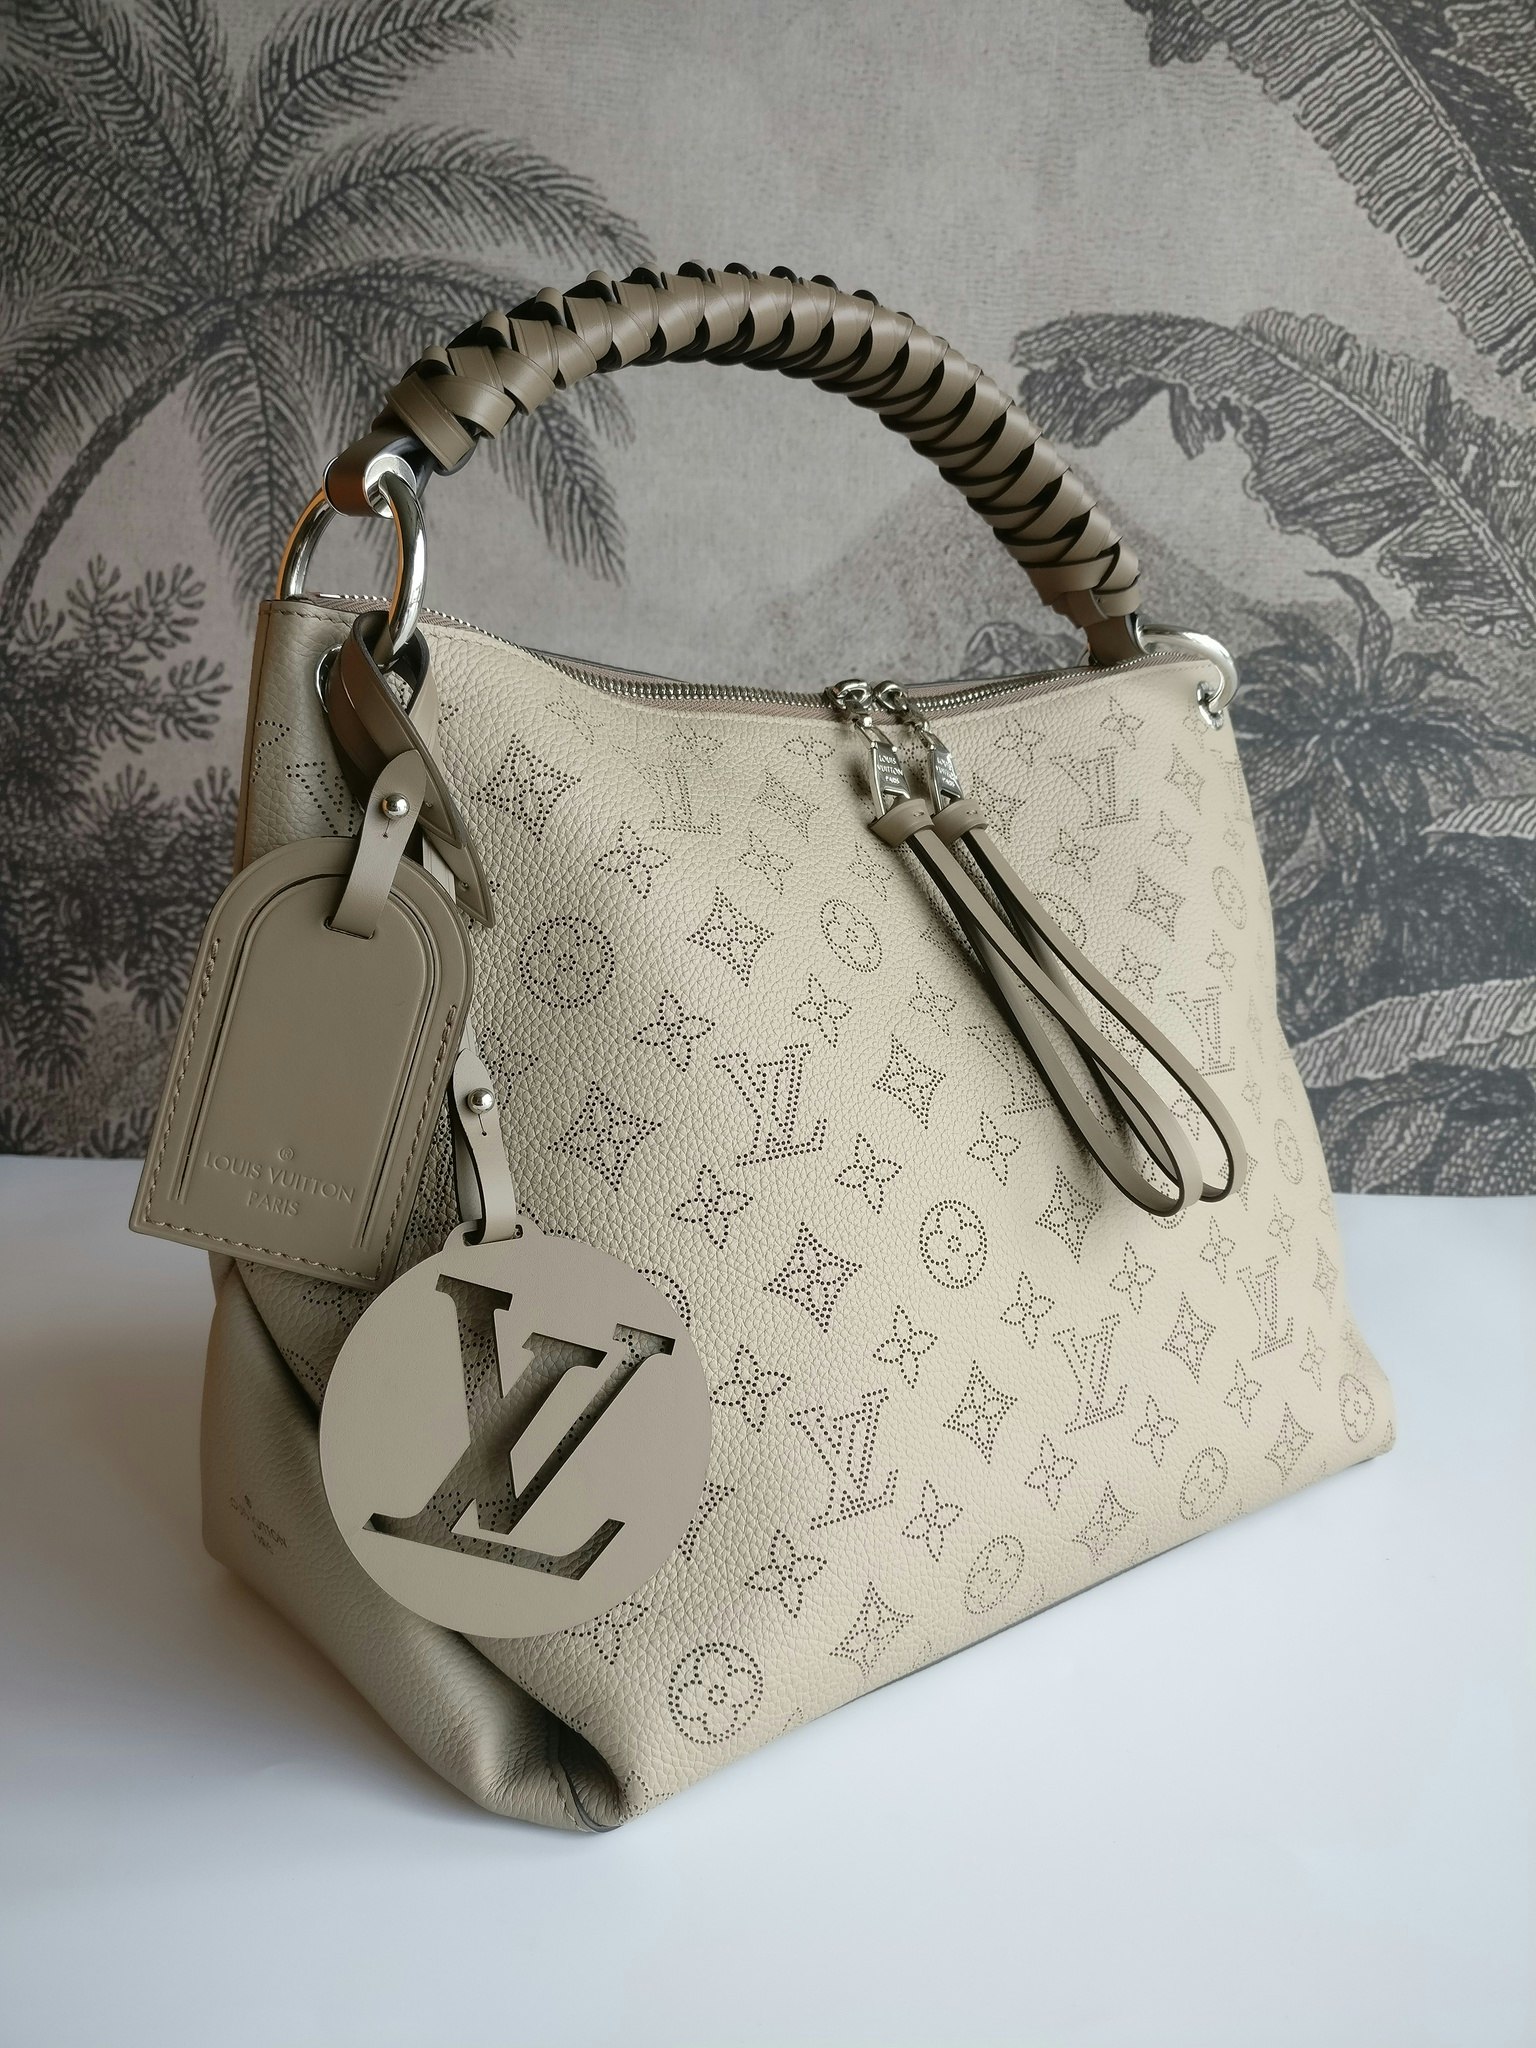 LOUIS VUITTON Beaubourg Hobo shoulder bag Womens handbag M56084